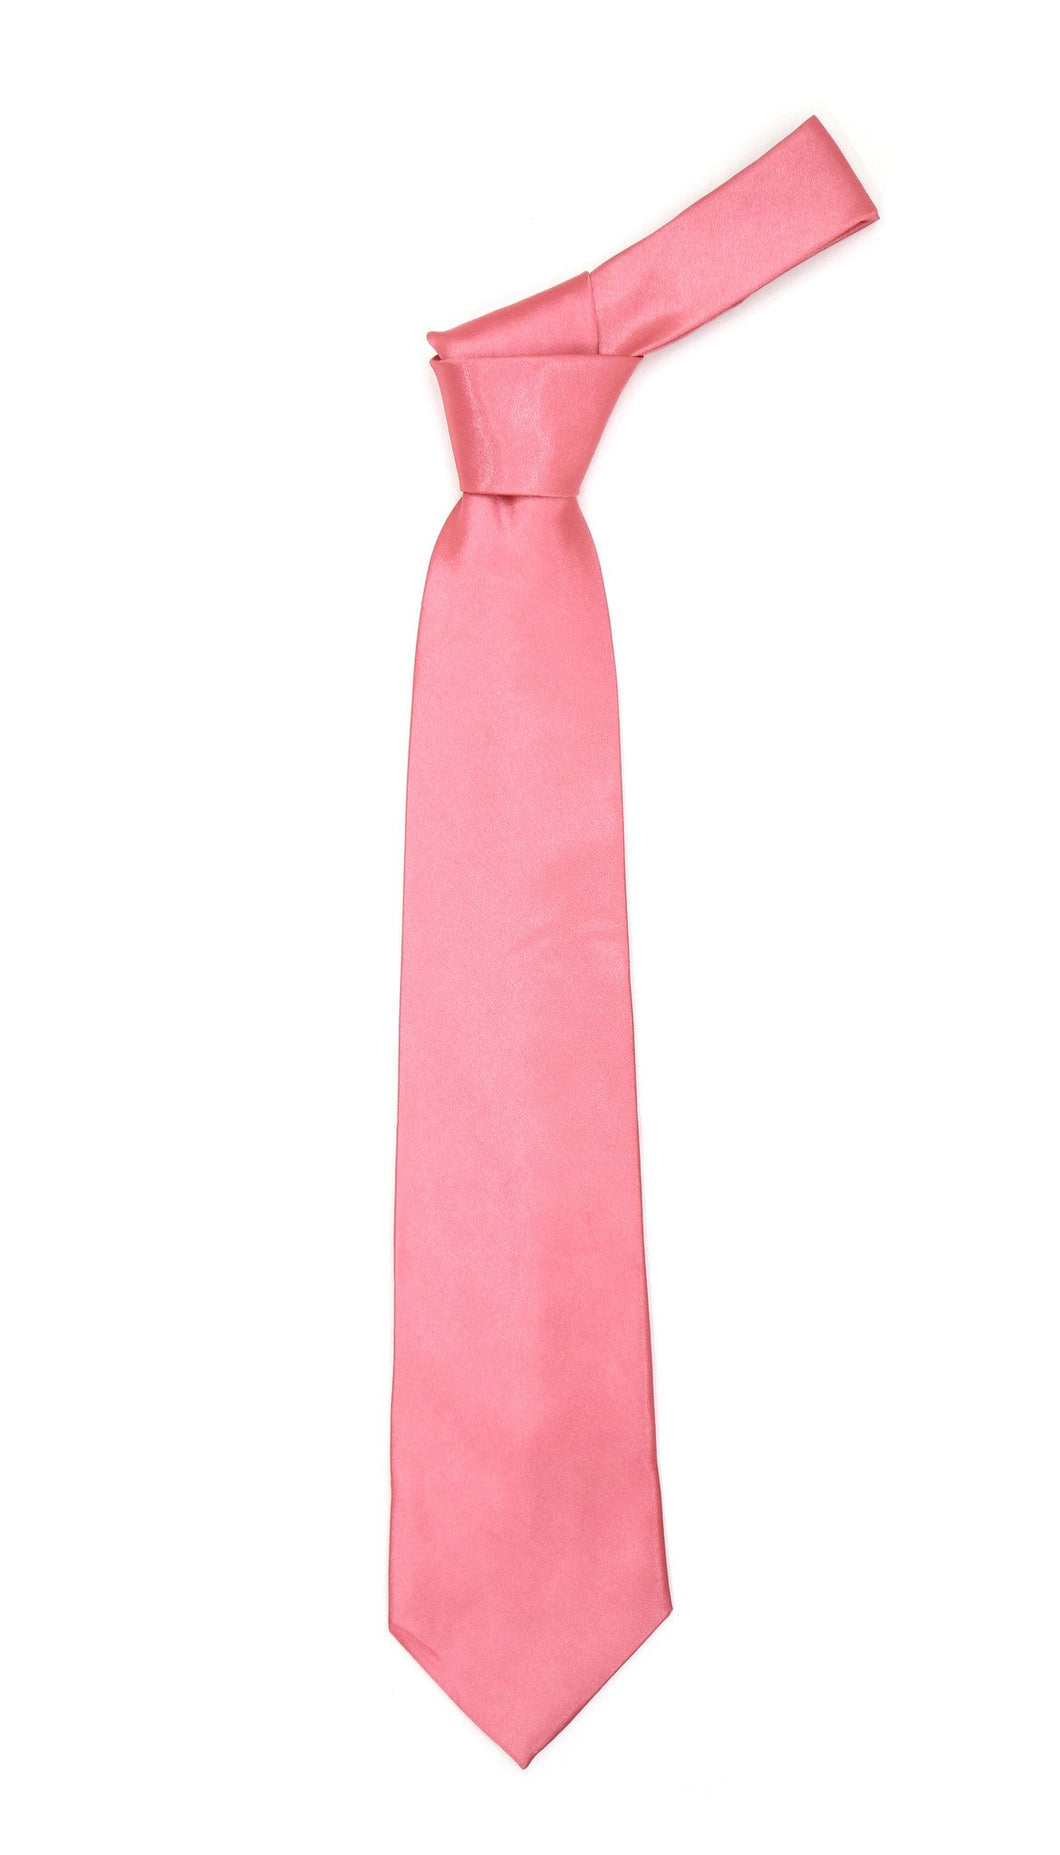 Premium Microfiber Hot Pink Necktie - Ferrecci USA 